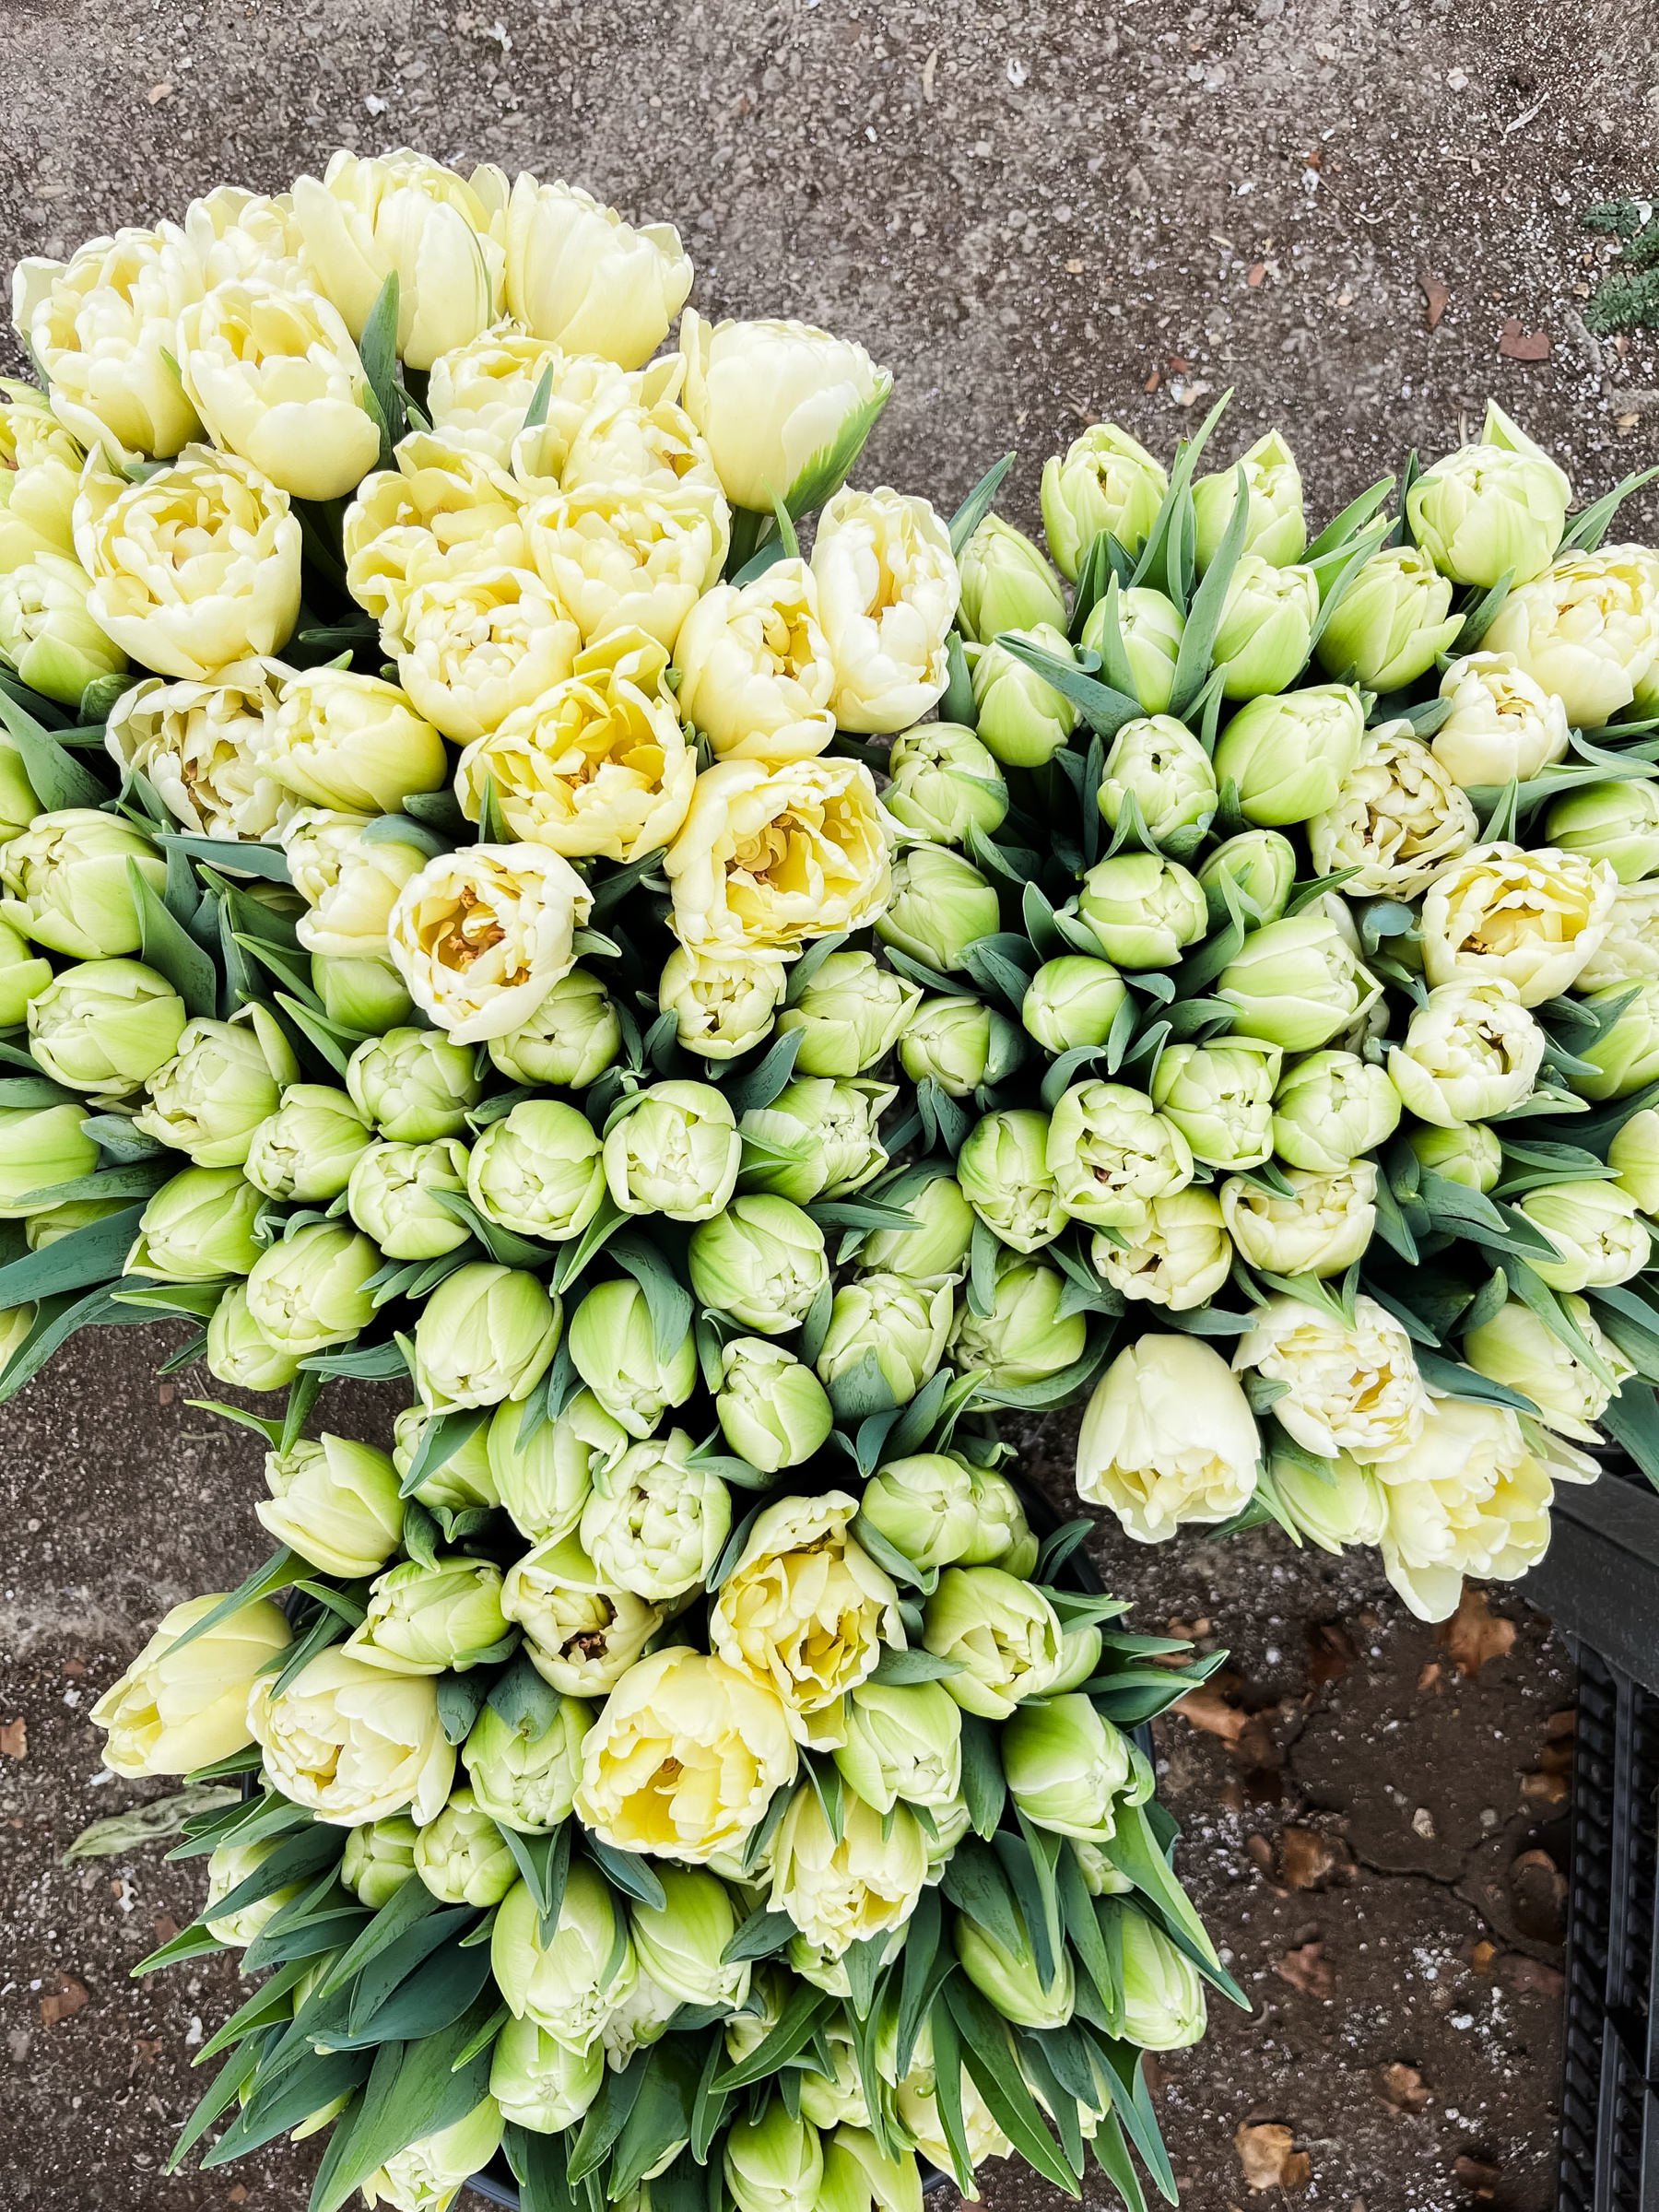 Diddle-And-Zen-Vermont-Wedding-Floral-Designer-Arrangement-Bouquet-Diddle-and-Zen-Vermont-Florist-Tulip-Subscription10.jpg